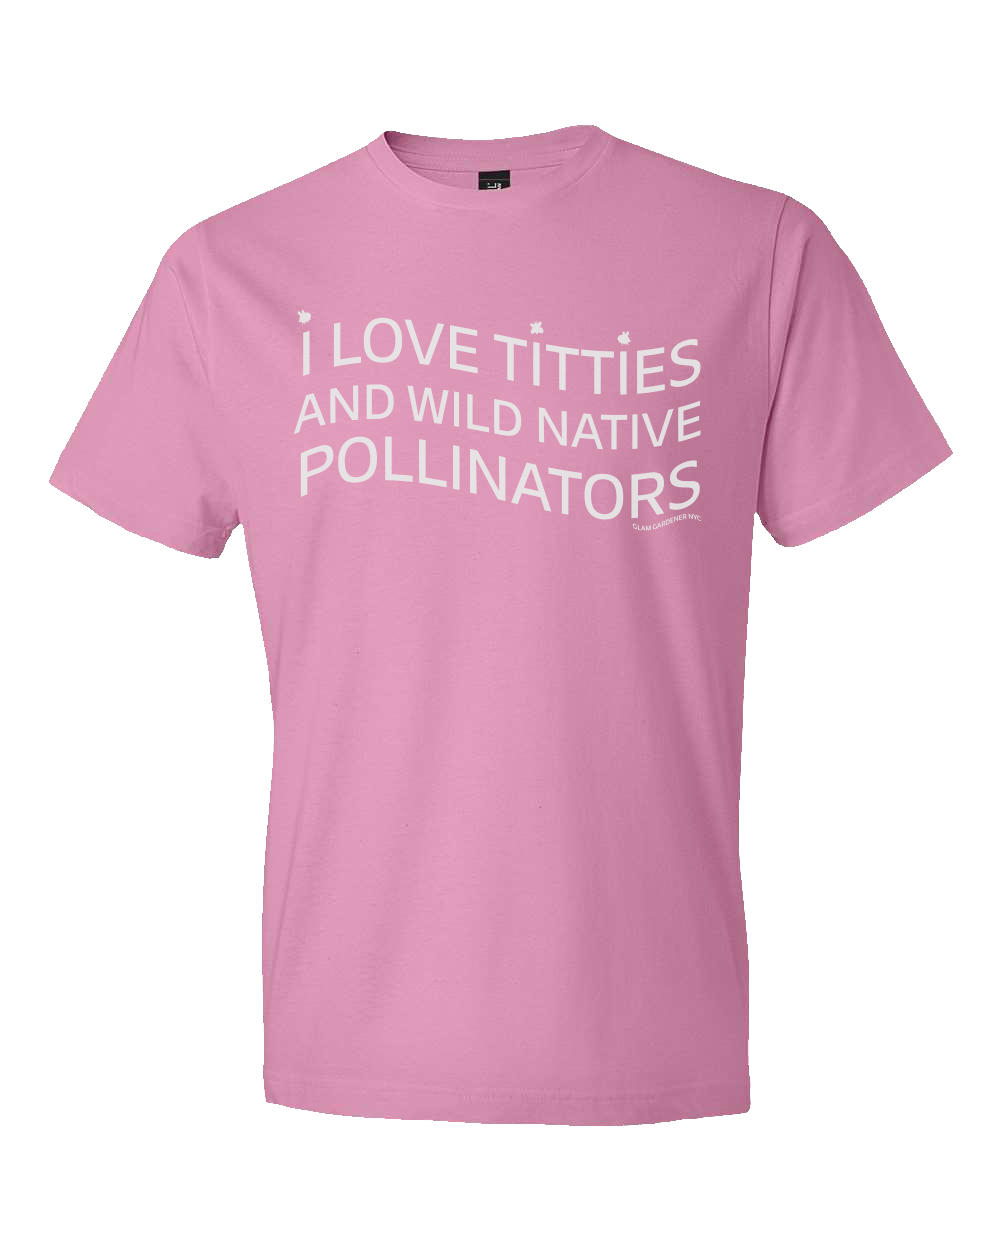 I love titties and wild native pollinators cotton shirt